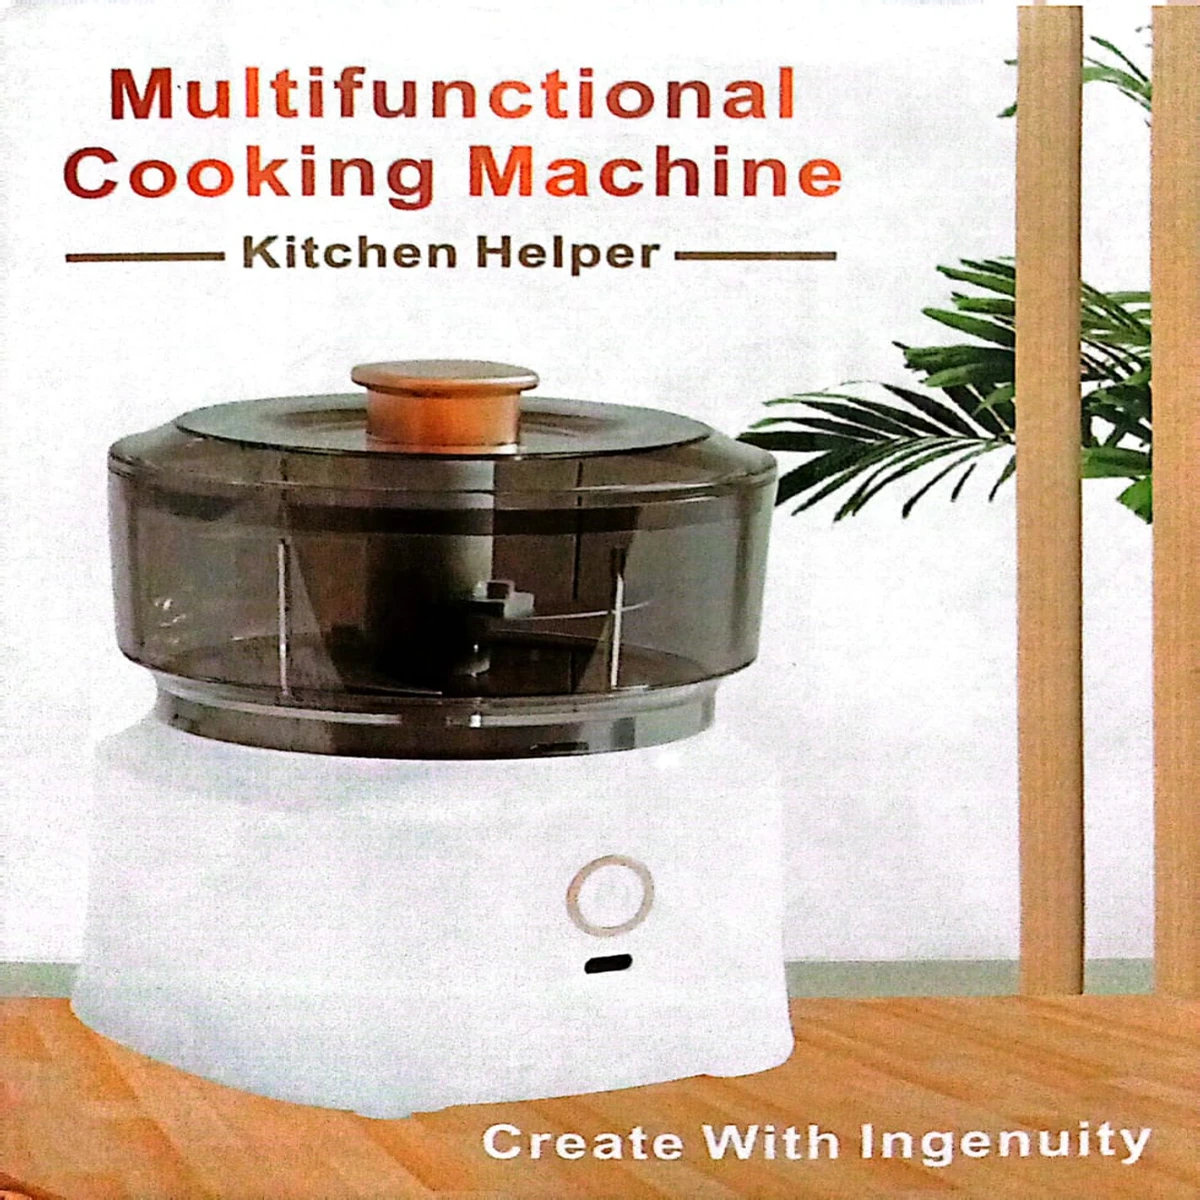 Multifunctional Cooking Machine